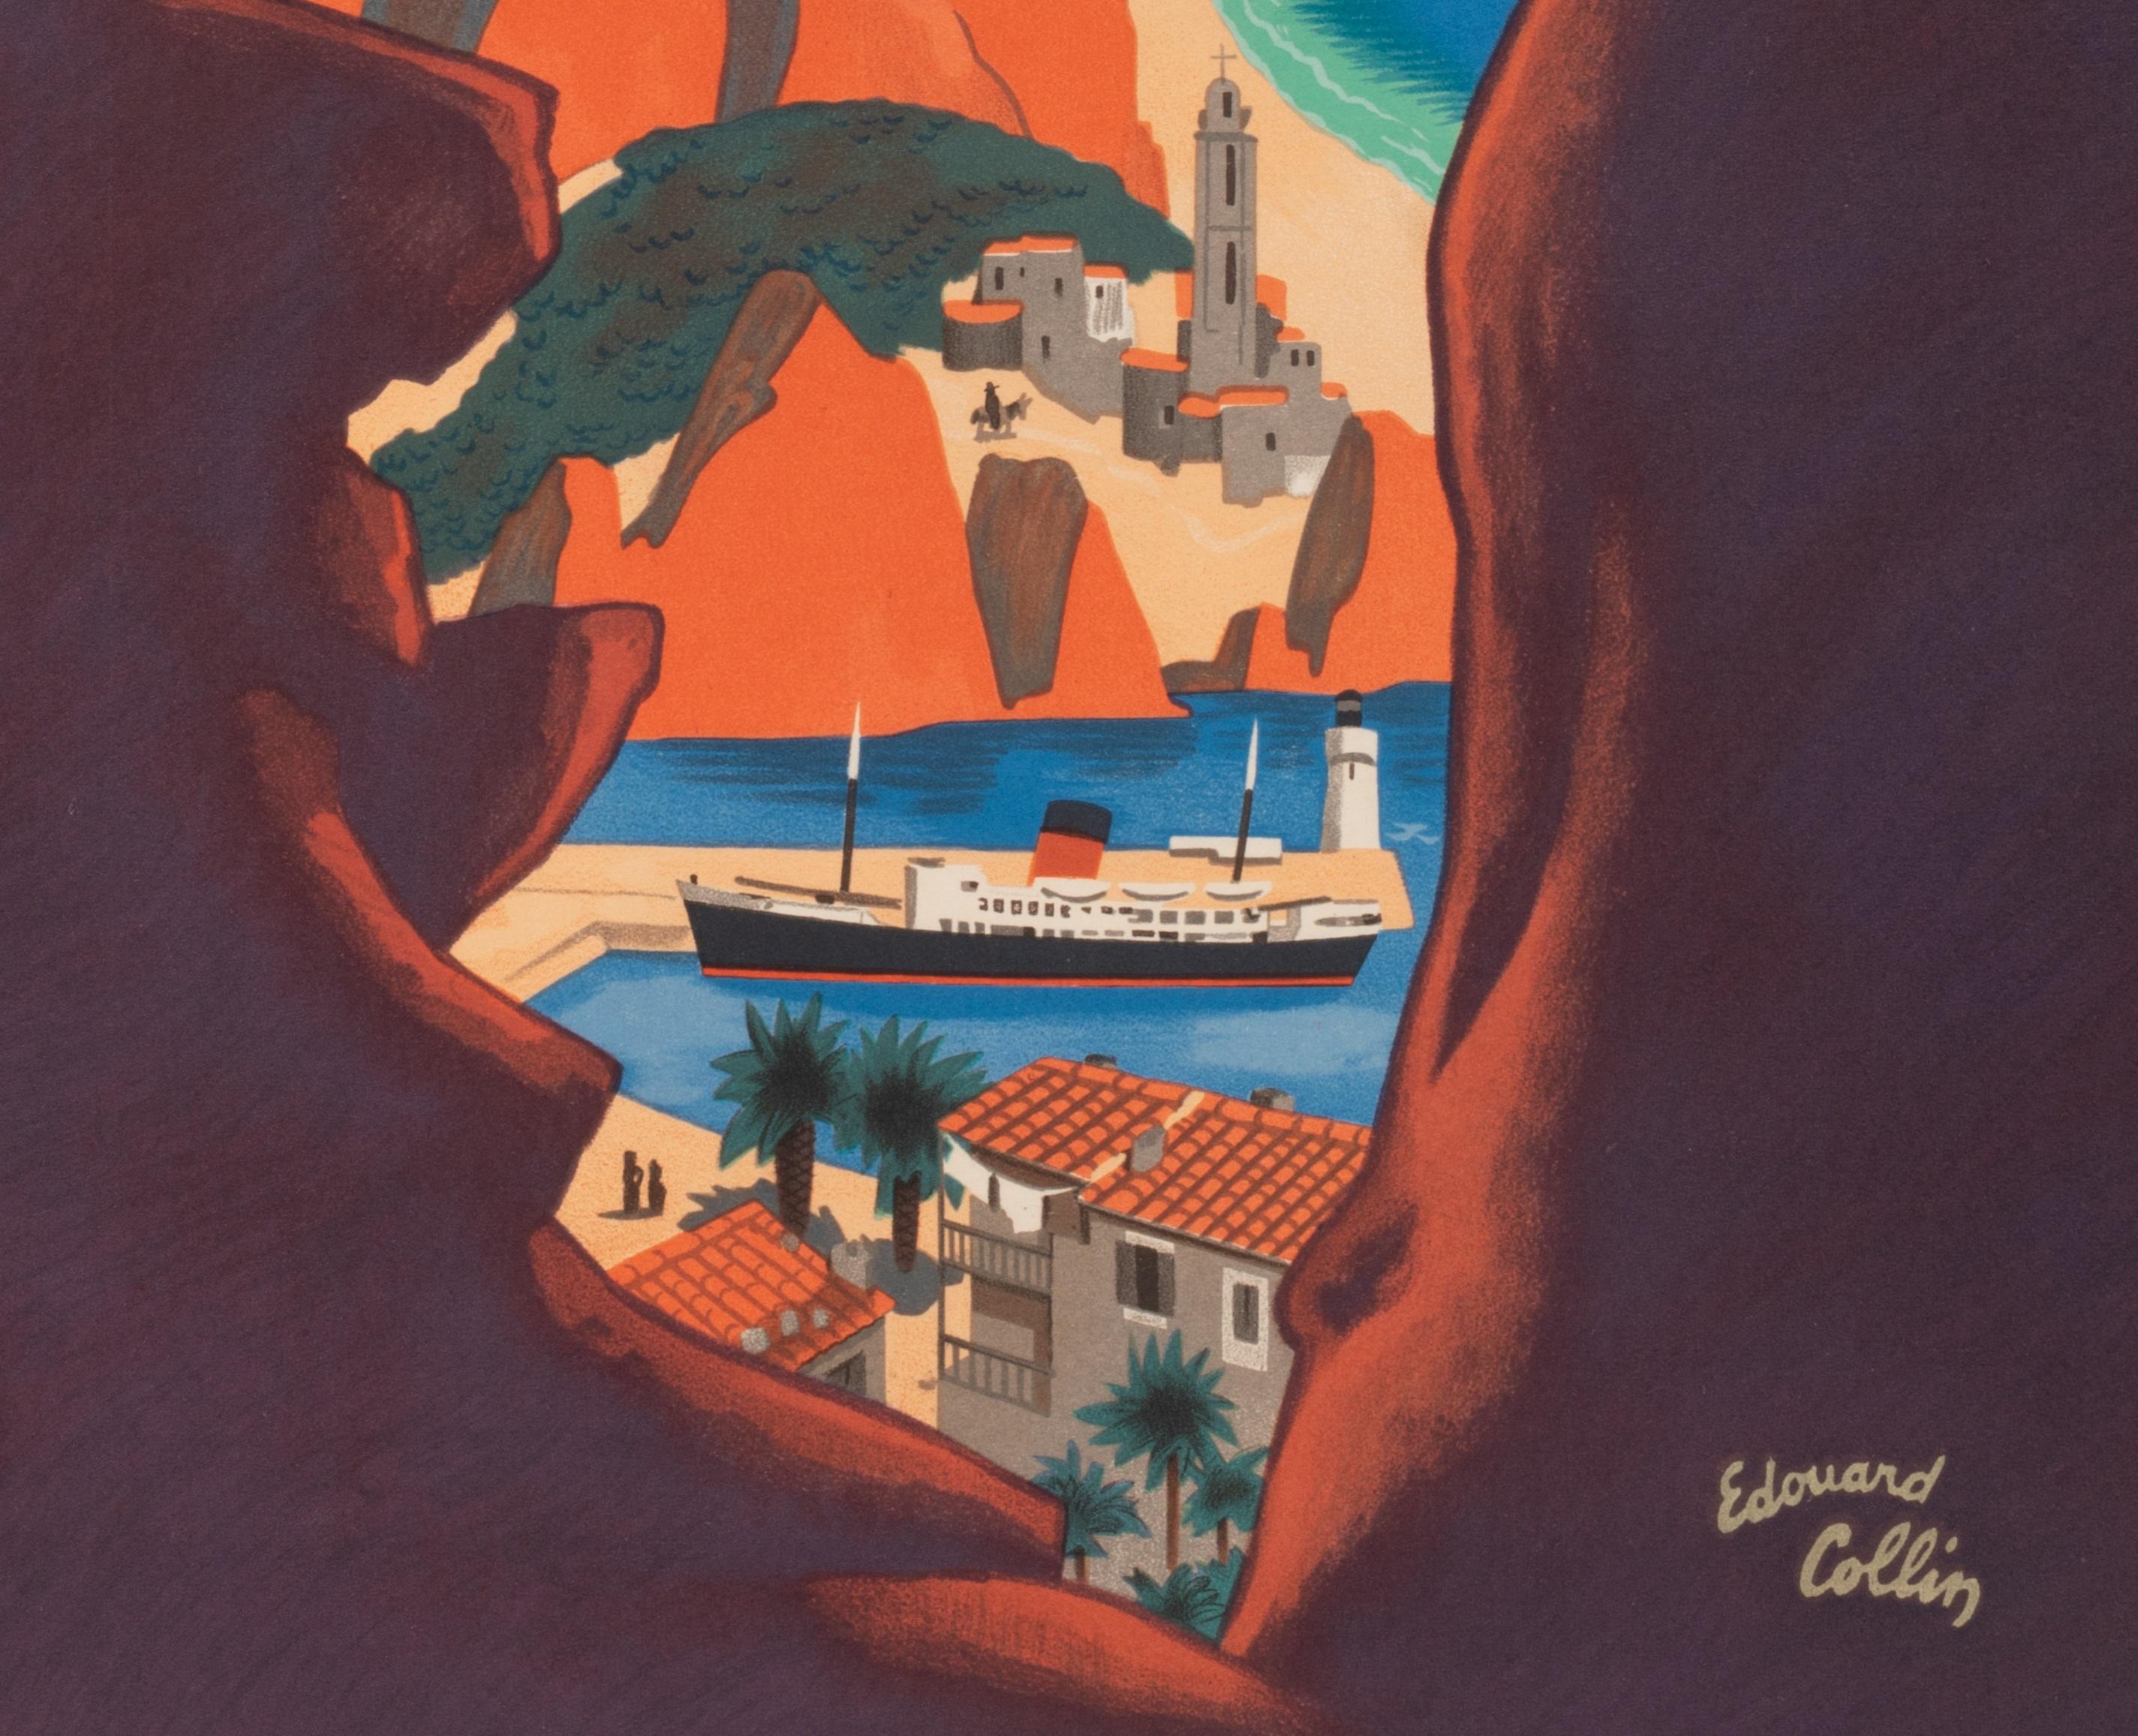 French Collin, Original Vintage Poster, Corsica, Transatlantique, Ocean Liner, 1950